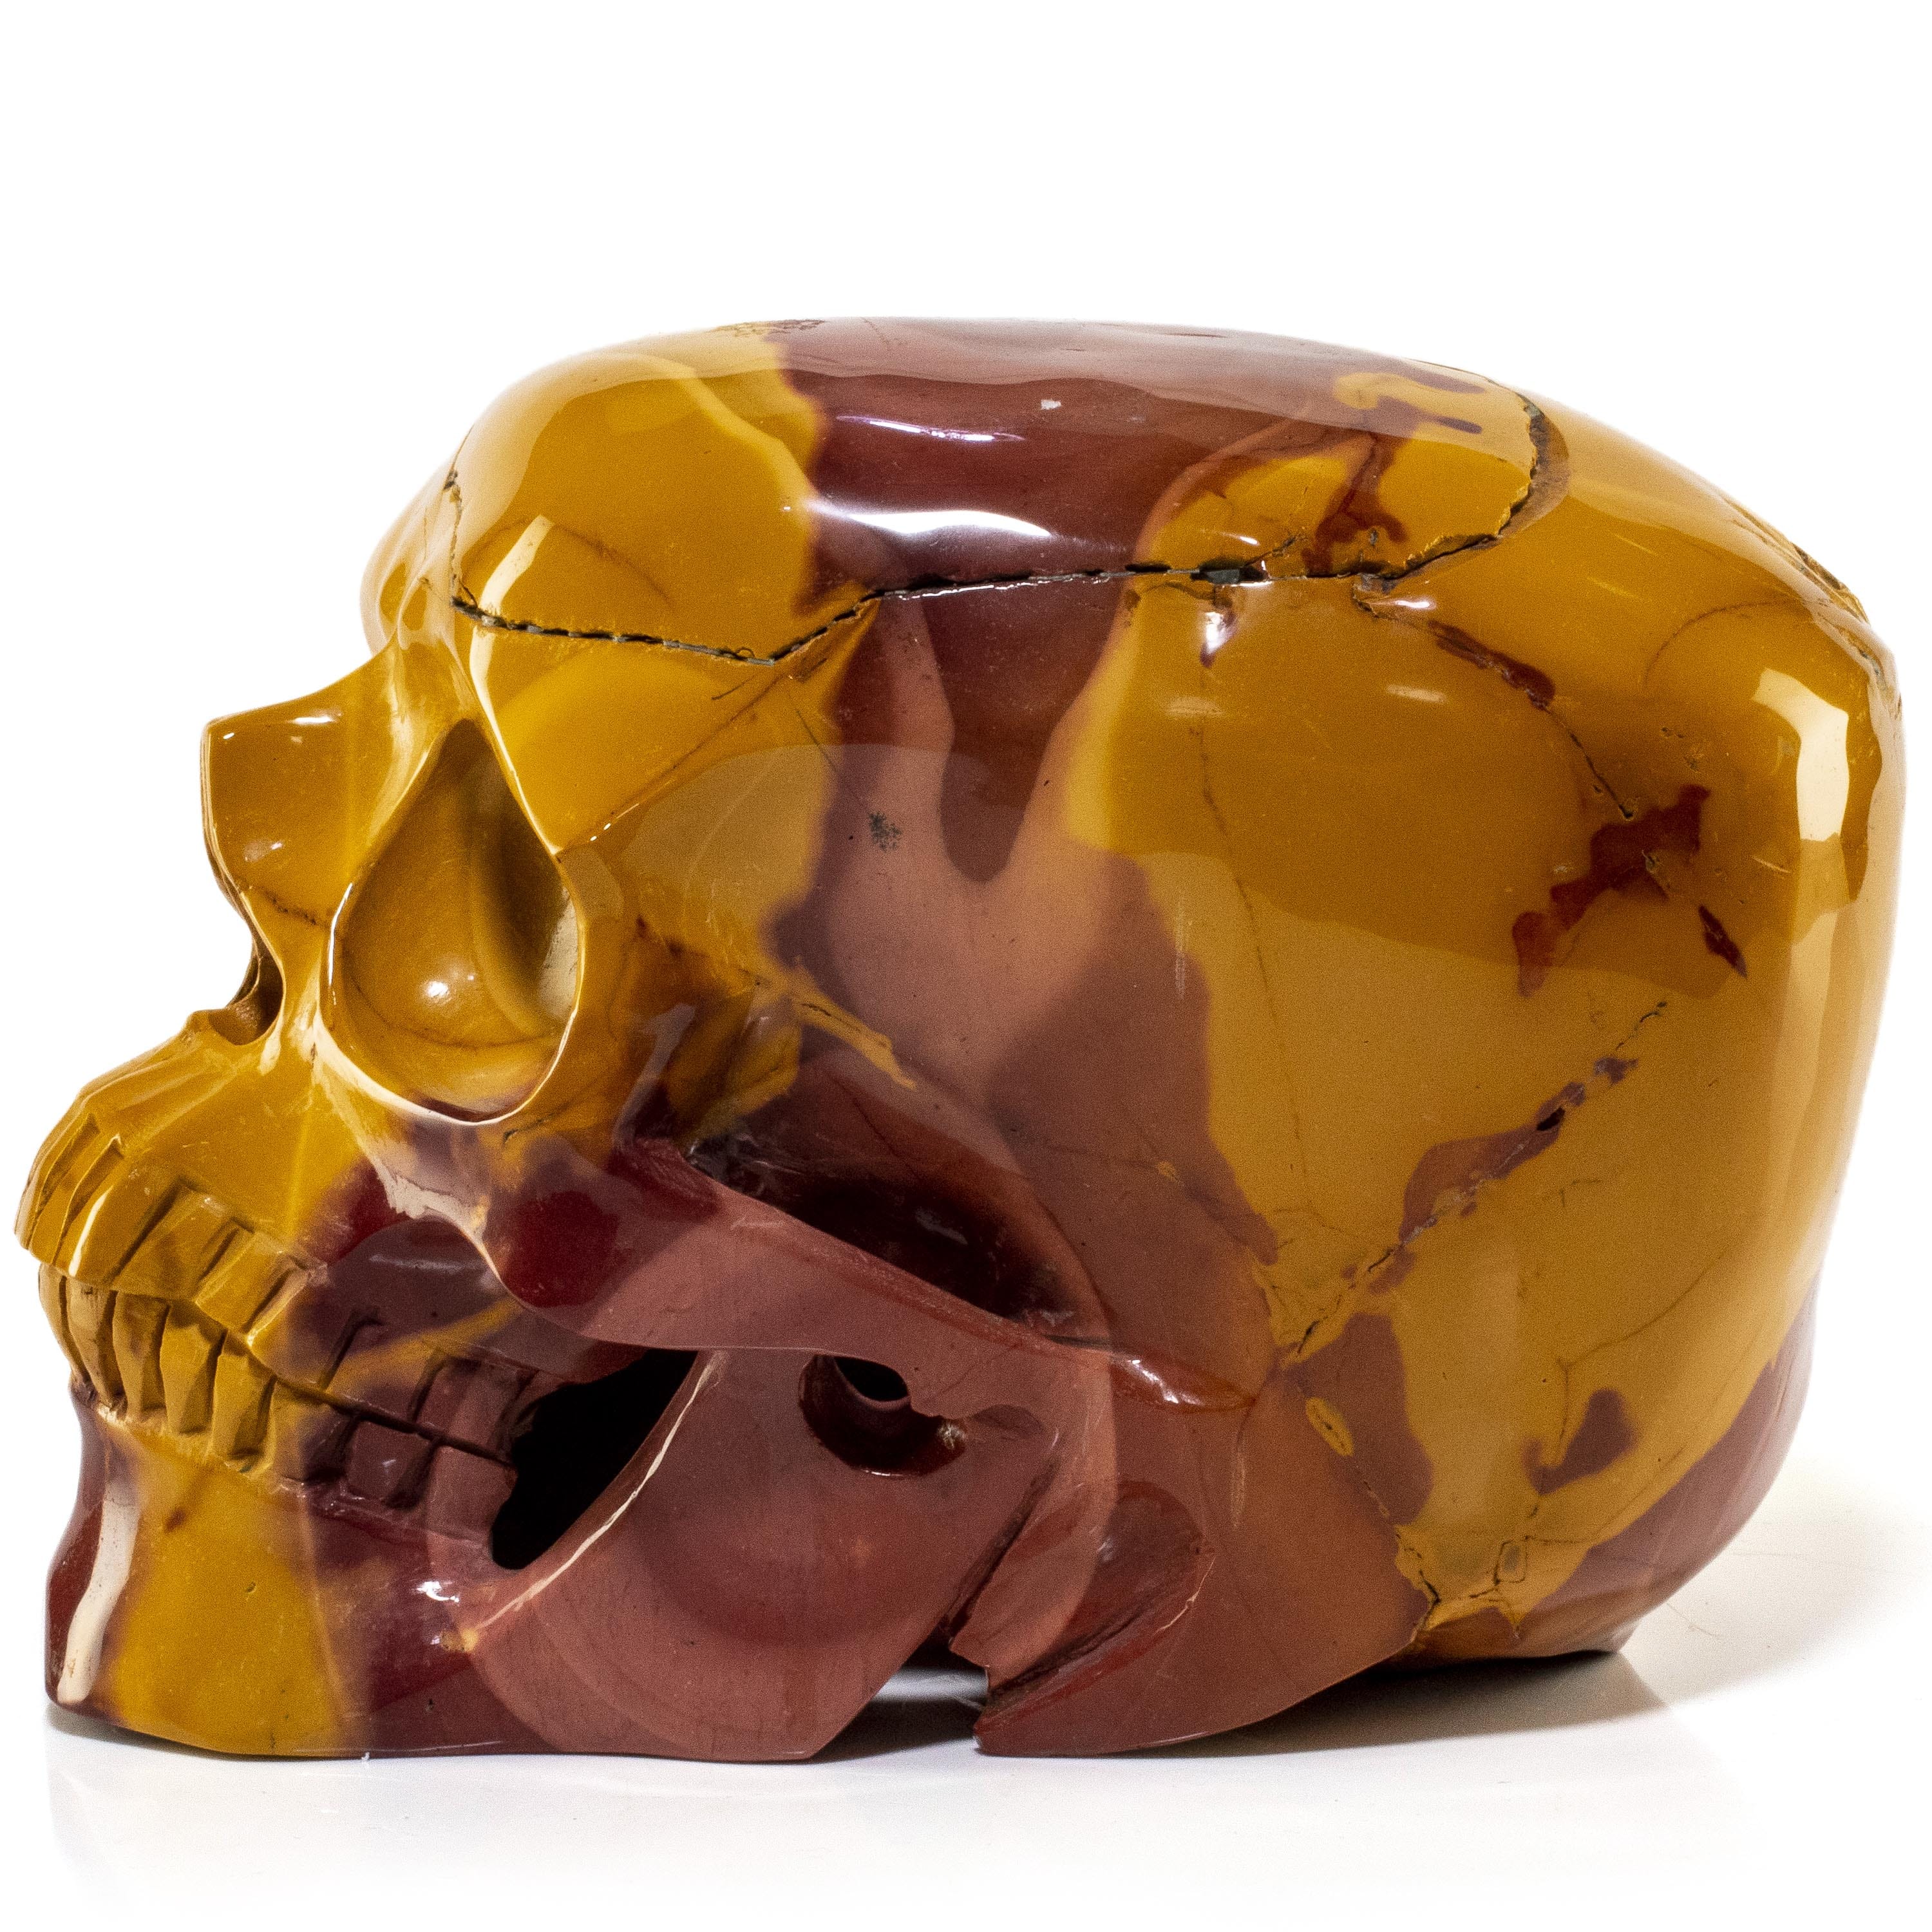 Kalifano Mookaite Mookaite Skull Carving 7" / 4,692g SK10800-MK.001